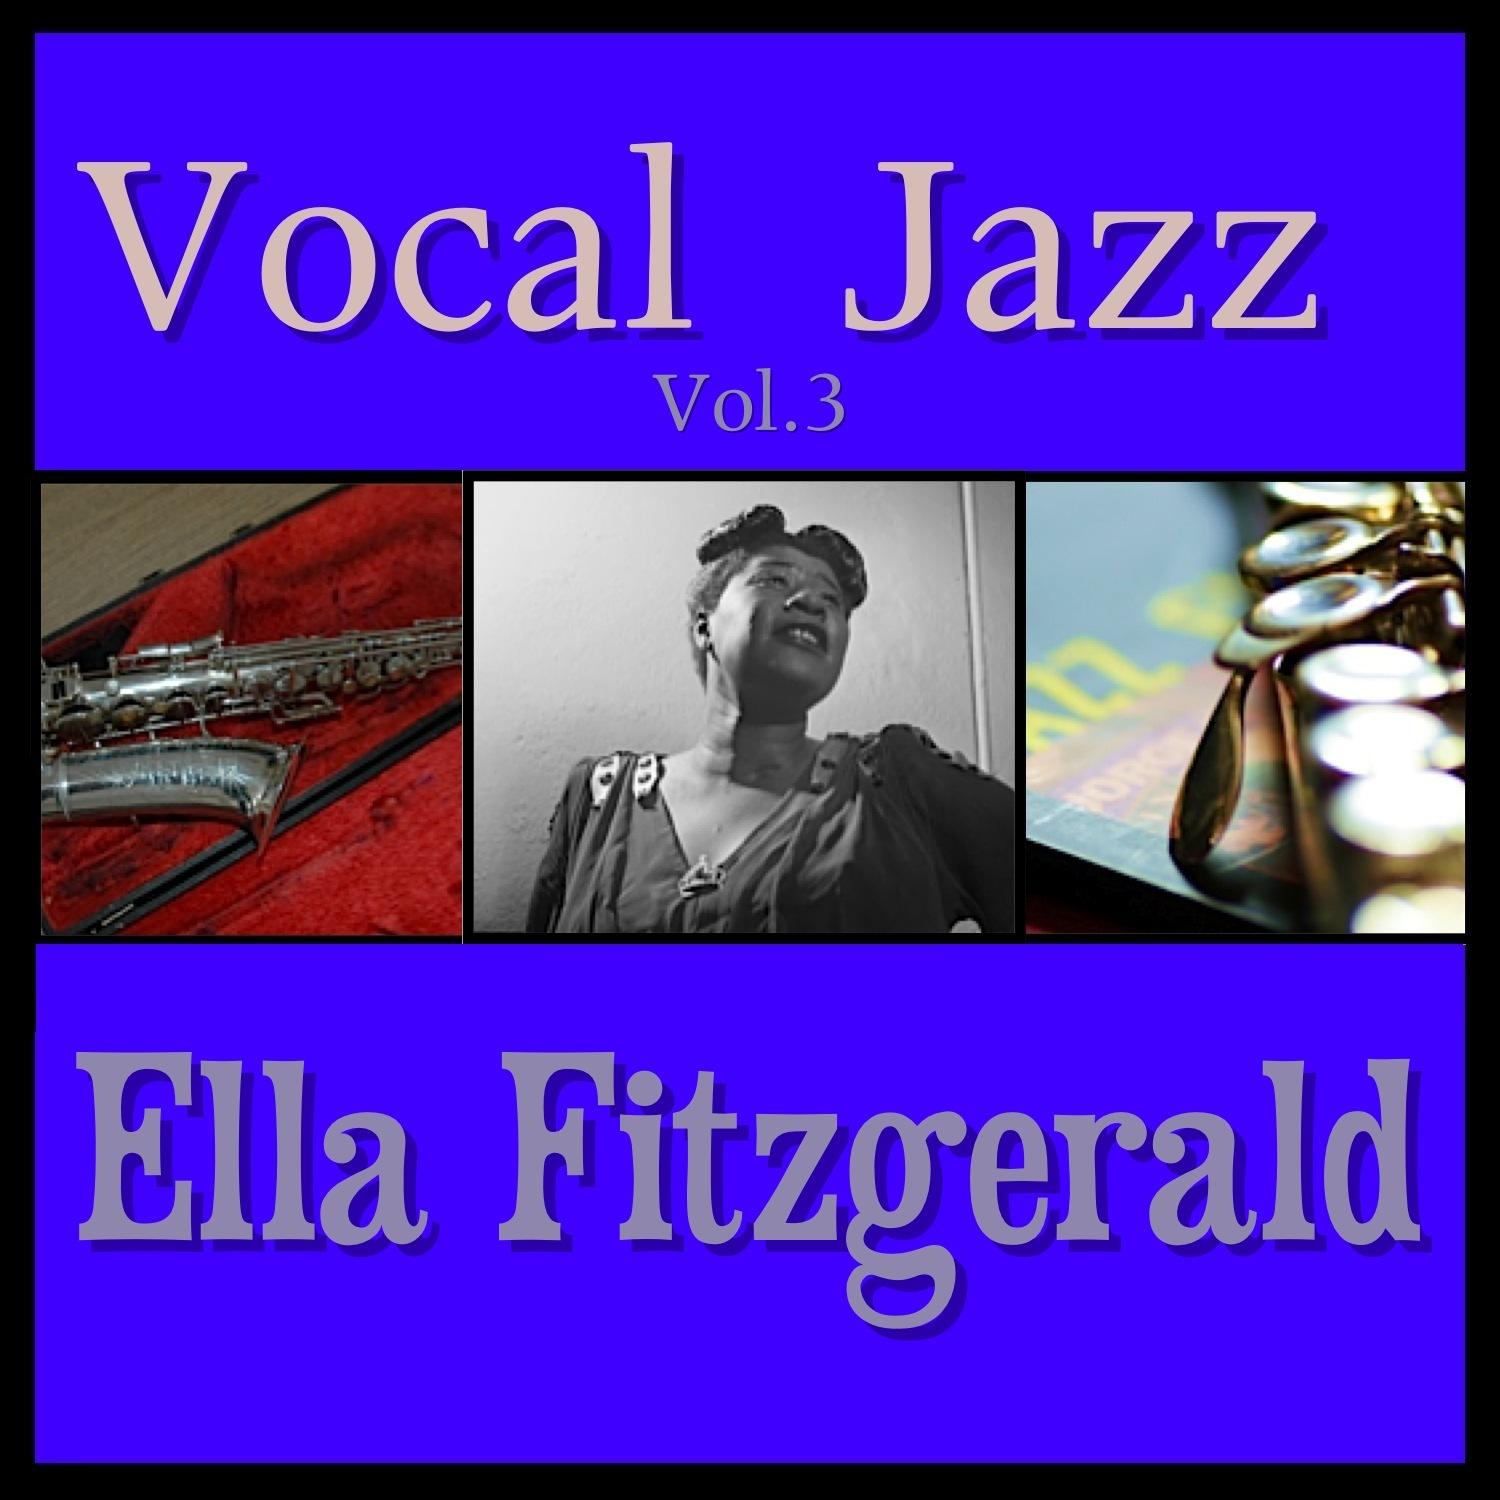 Vocal Jazz Vol. 3